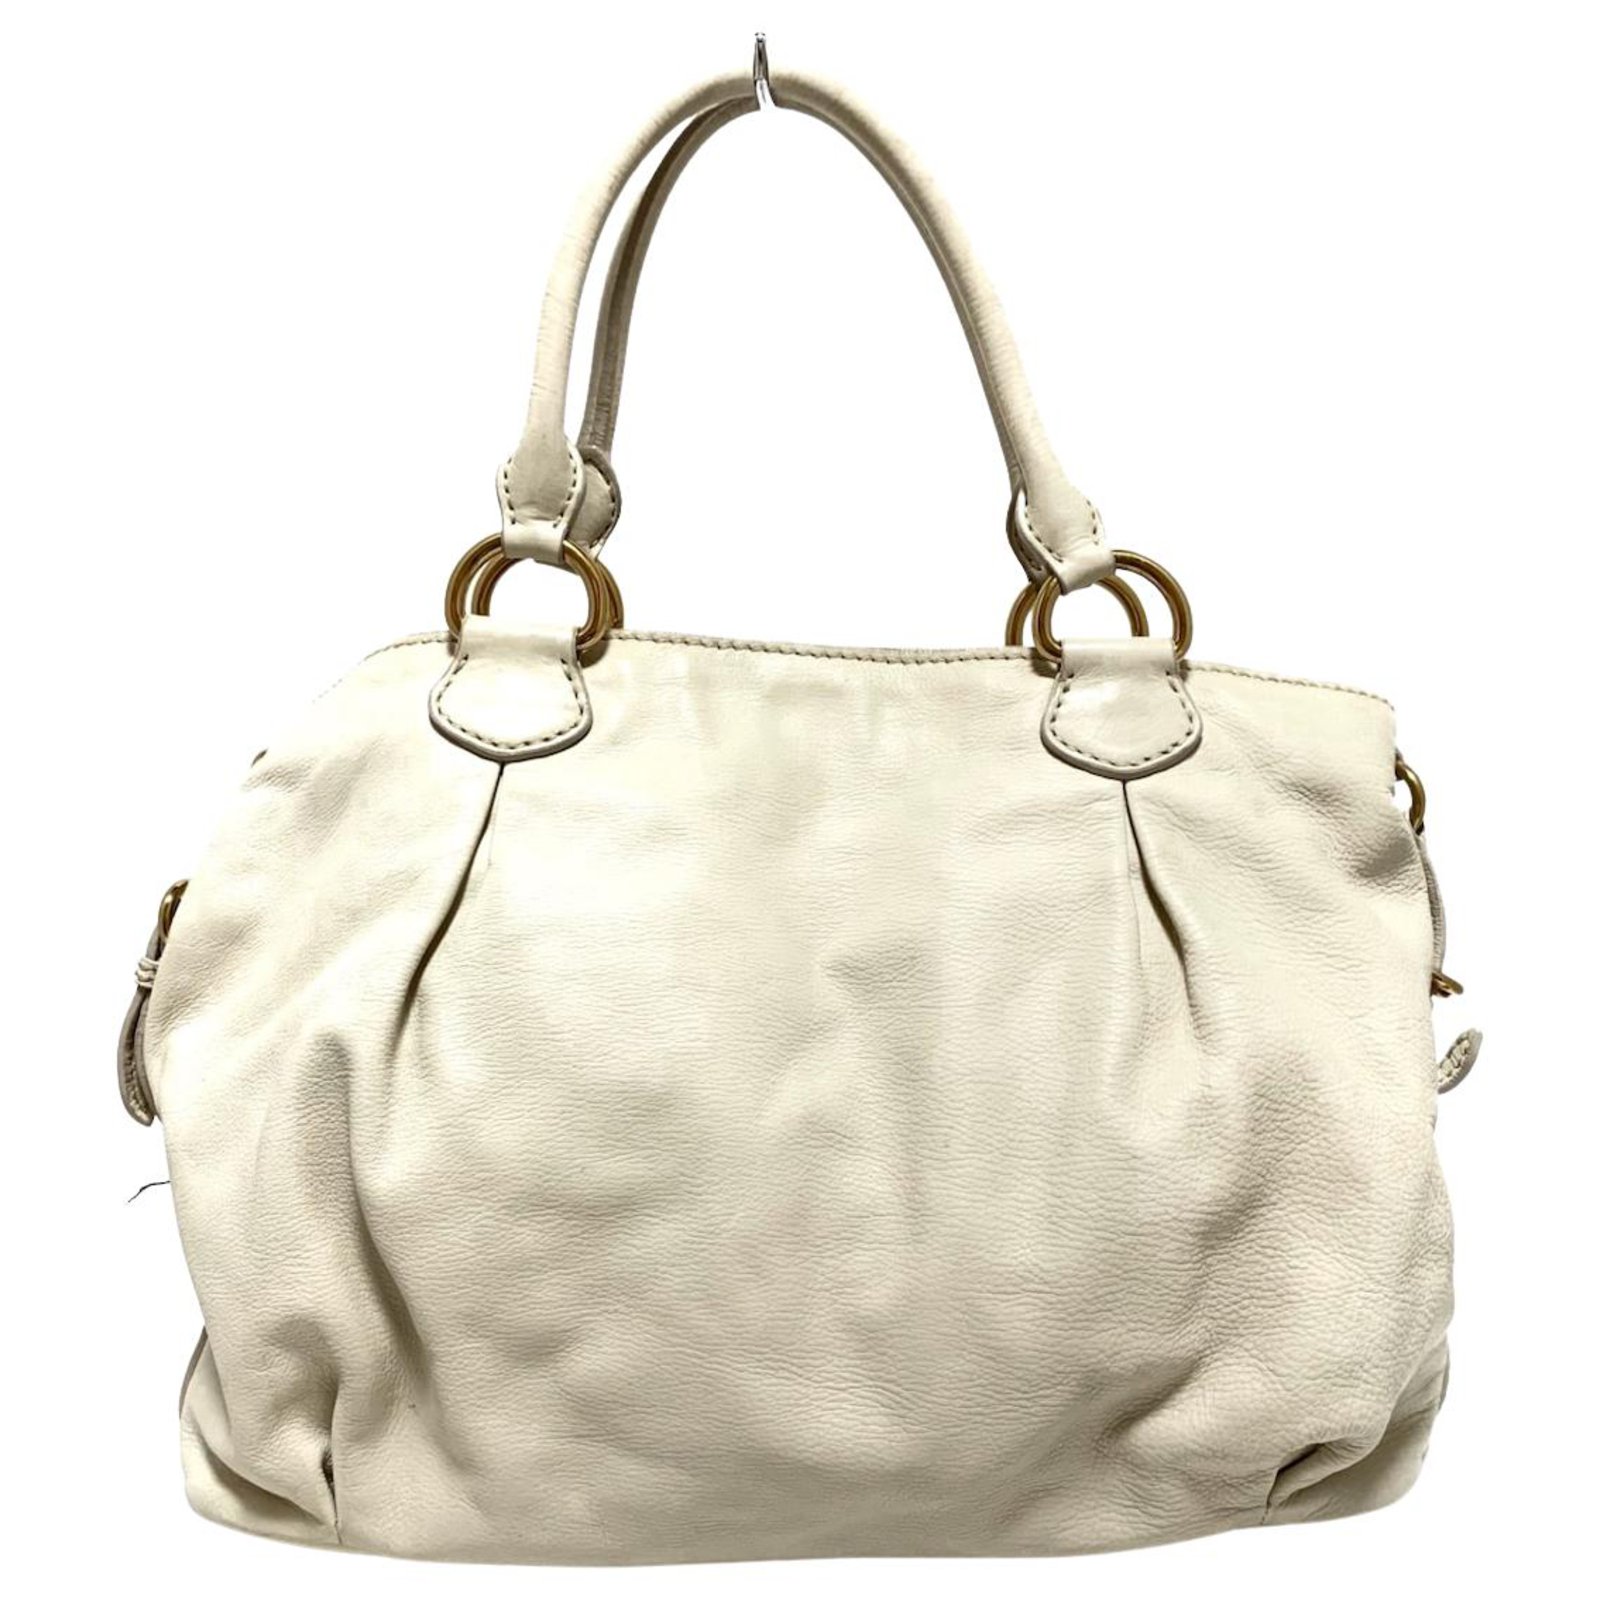 Miu Miu Large Tote Bag Cream Leather